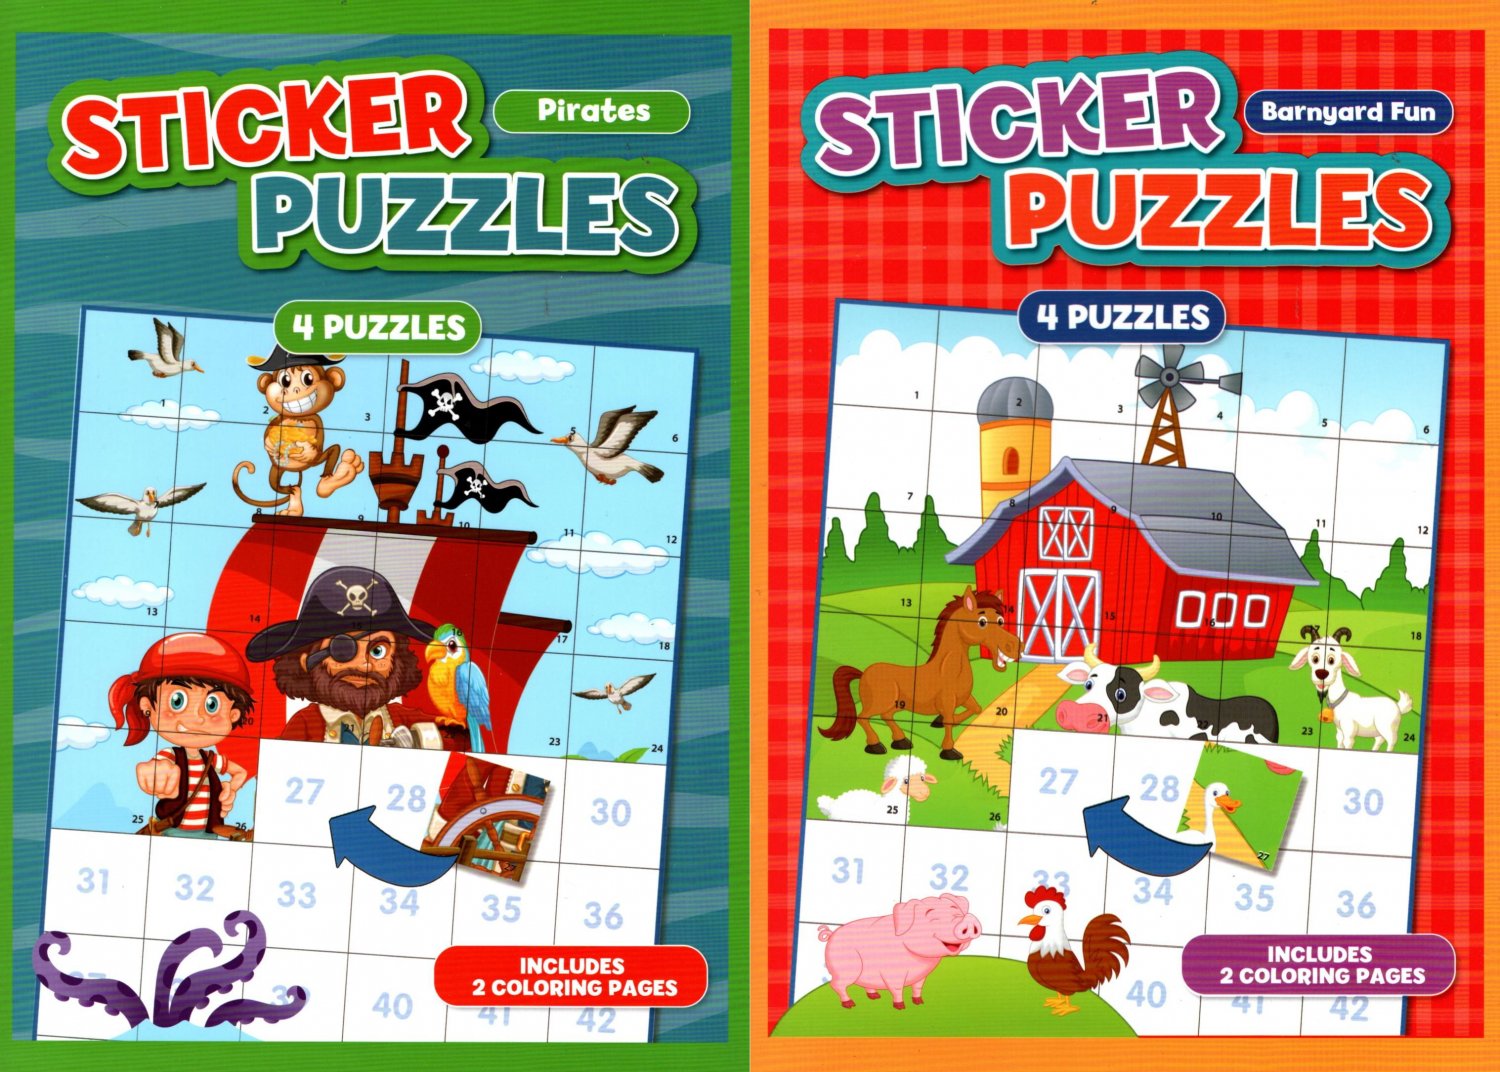 Activity Books for Kids: Sticker Puzzles - Barnyard Fun, Pirates (Set of 2 Books)